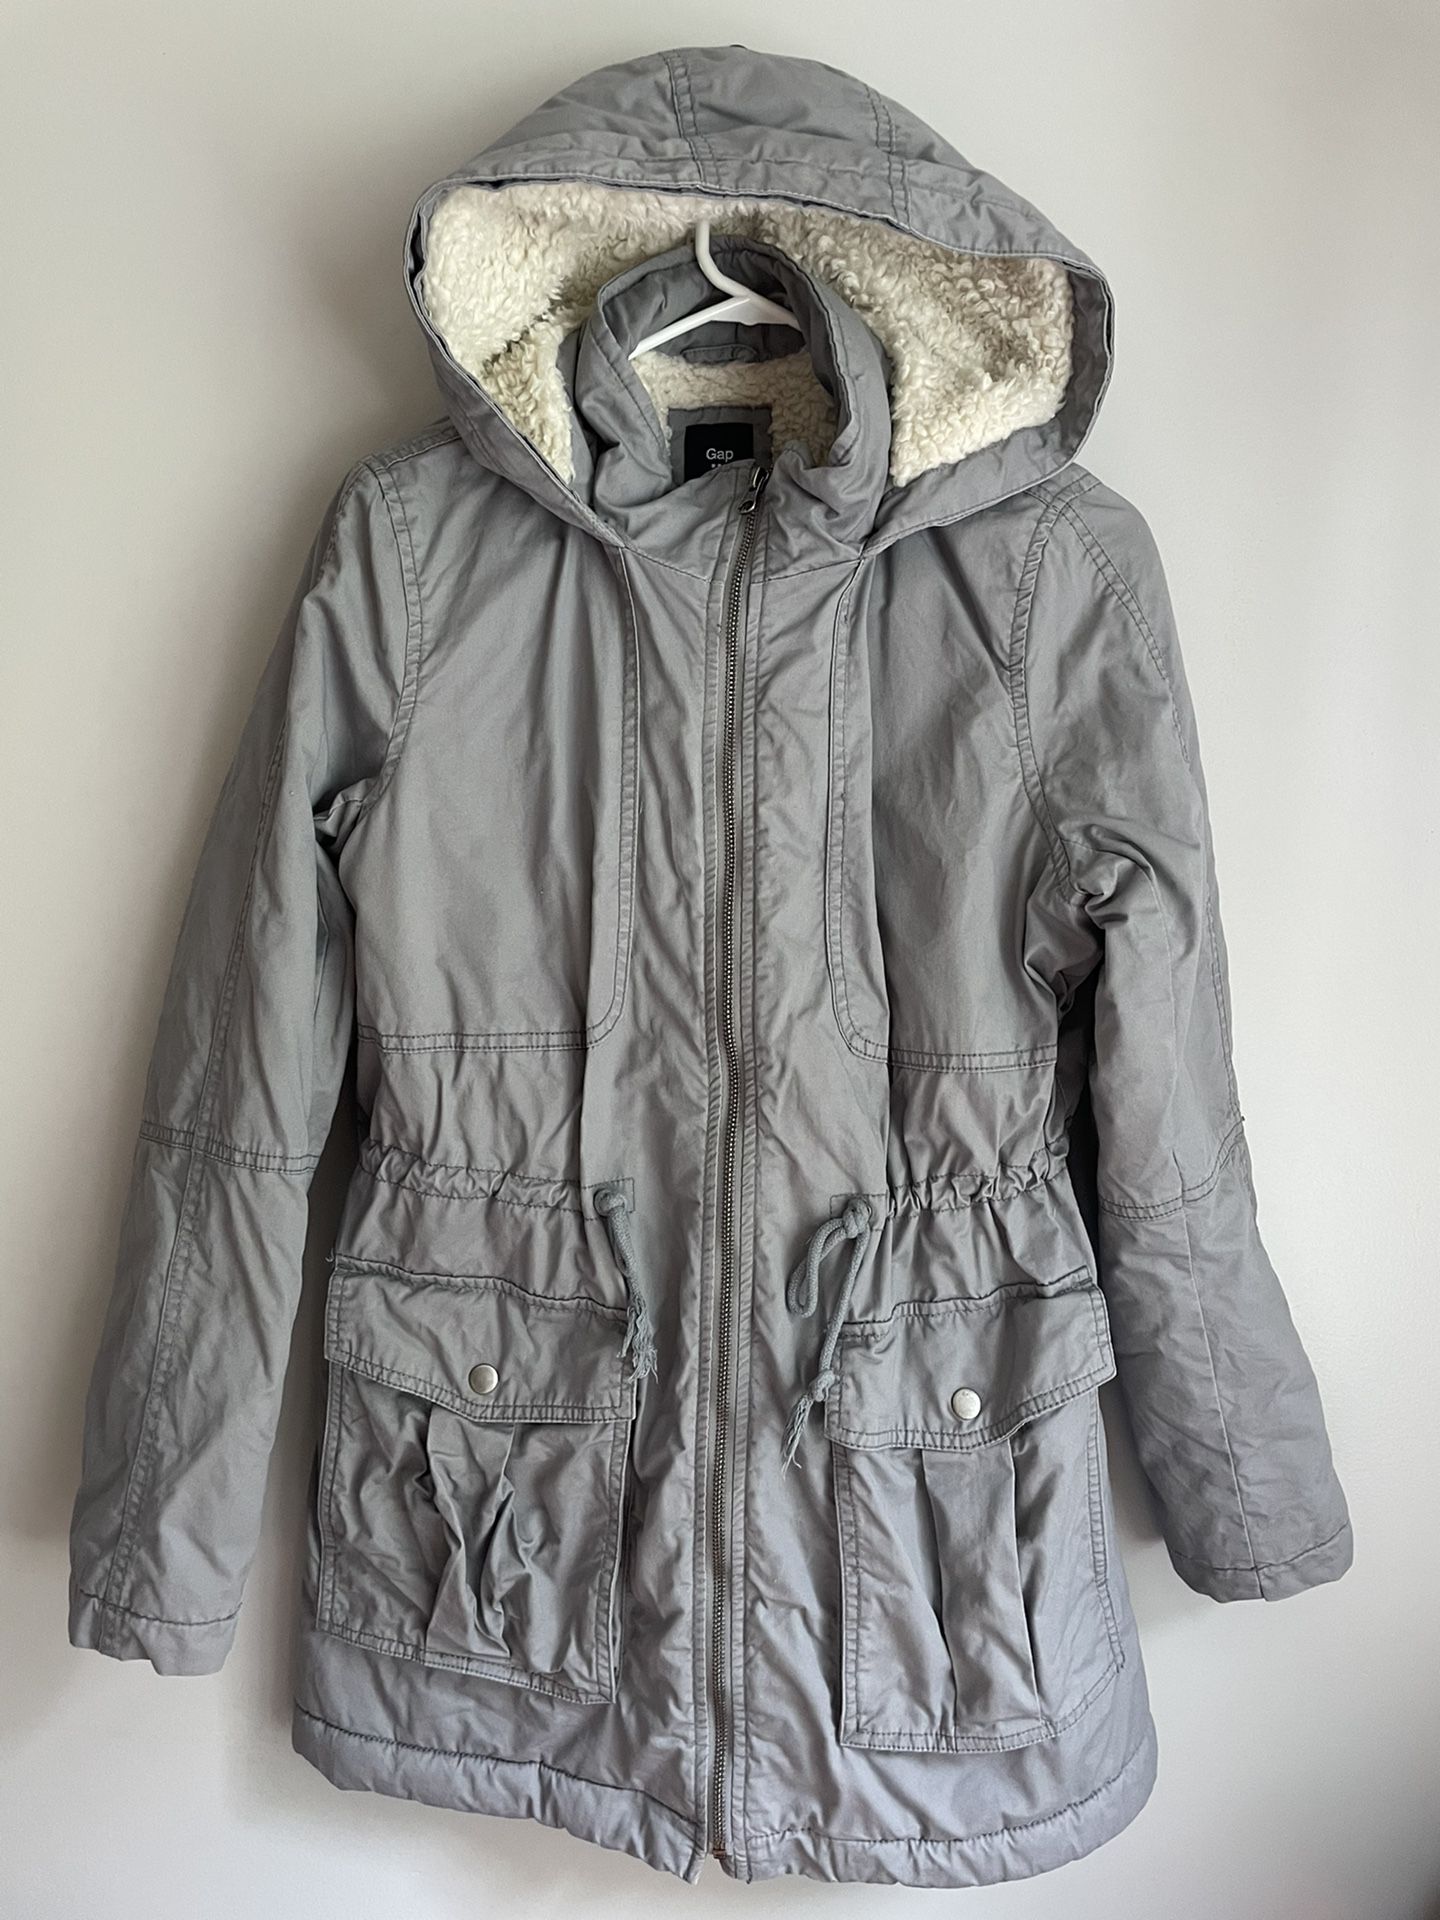 Gap Women’s Size Medium Parka Jacket Sherpa Lined Hooded Gray 